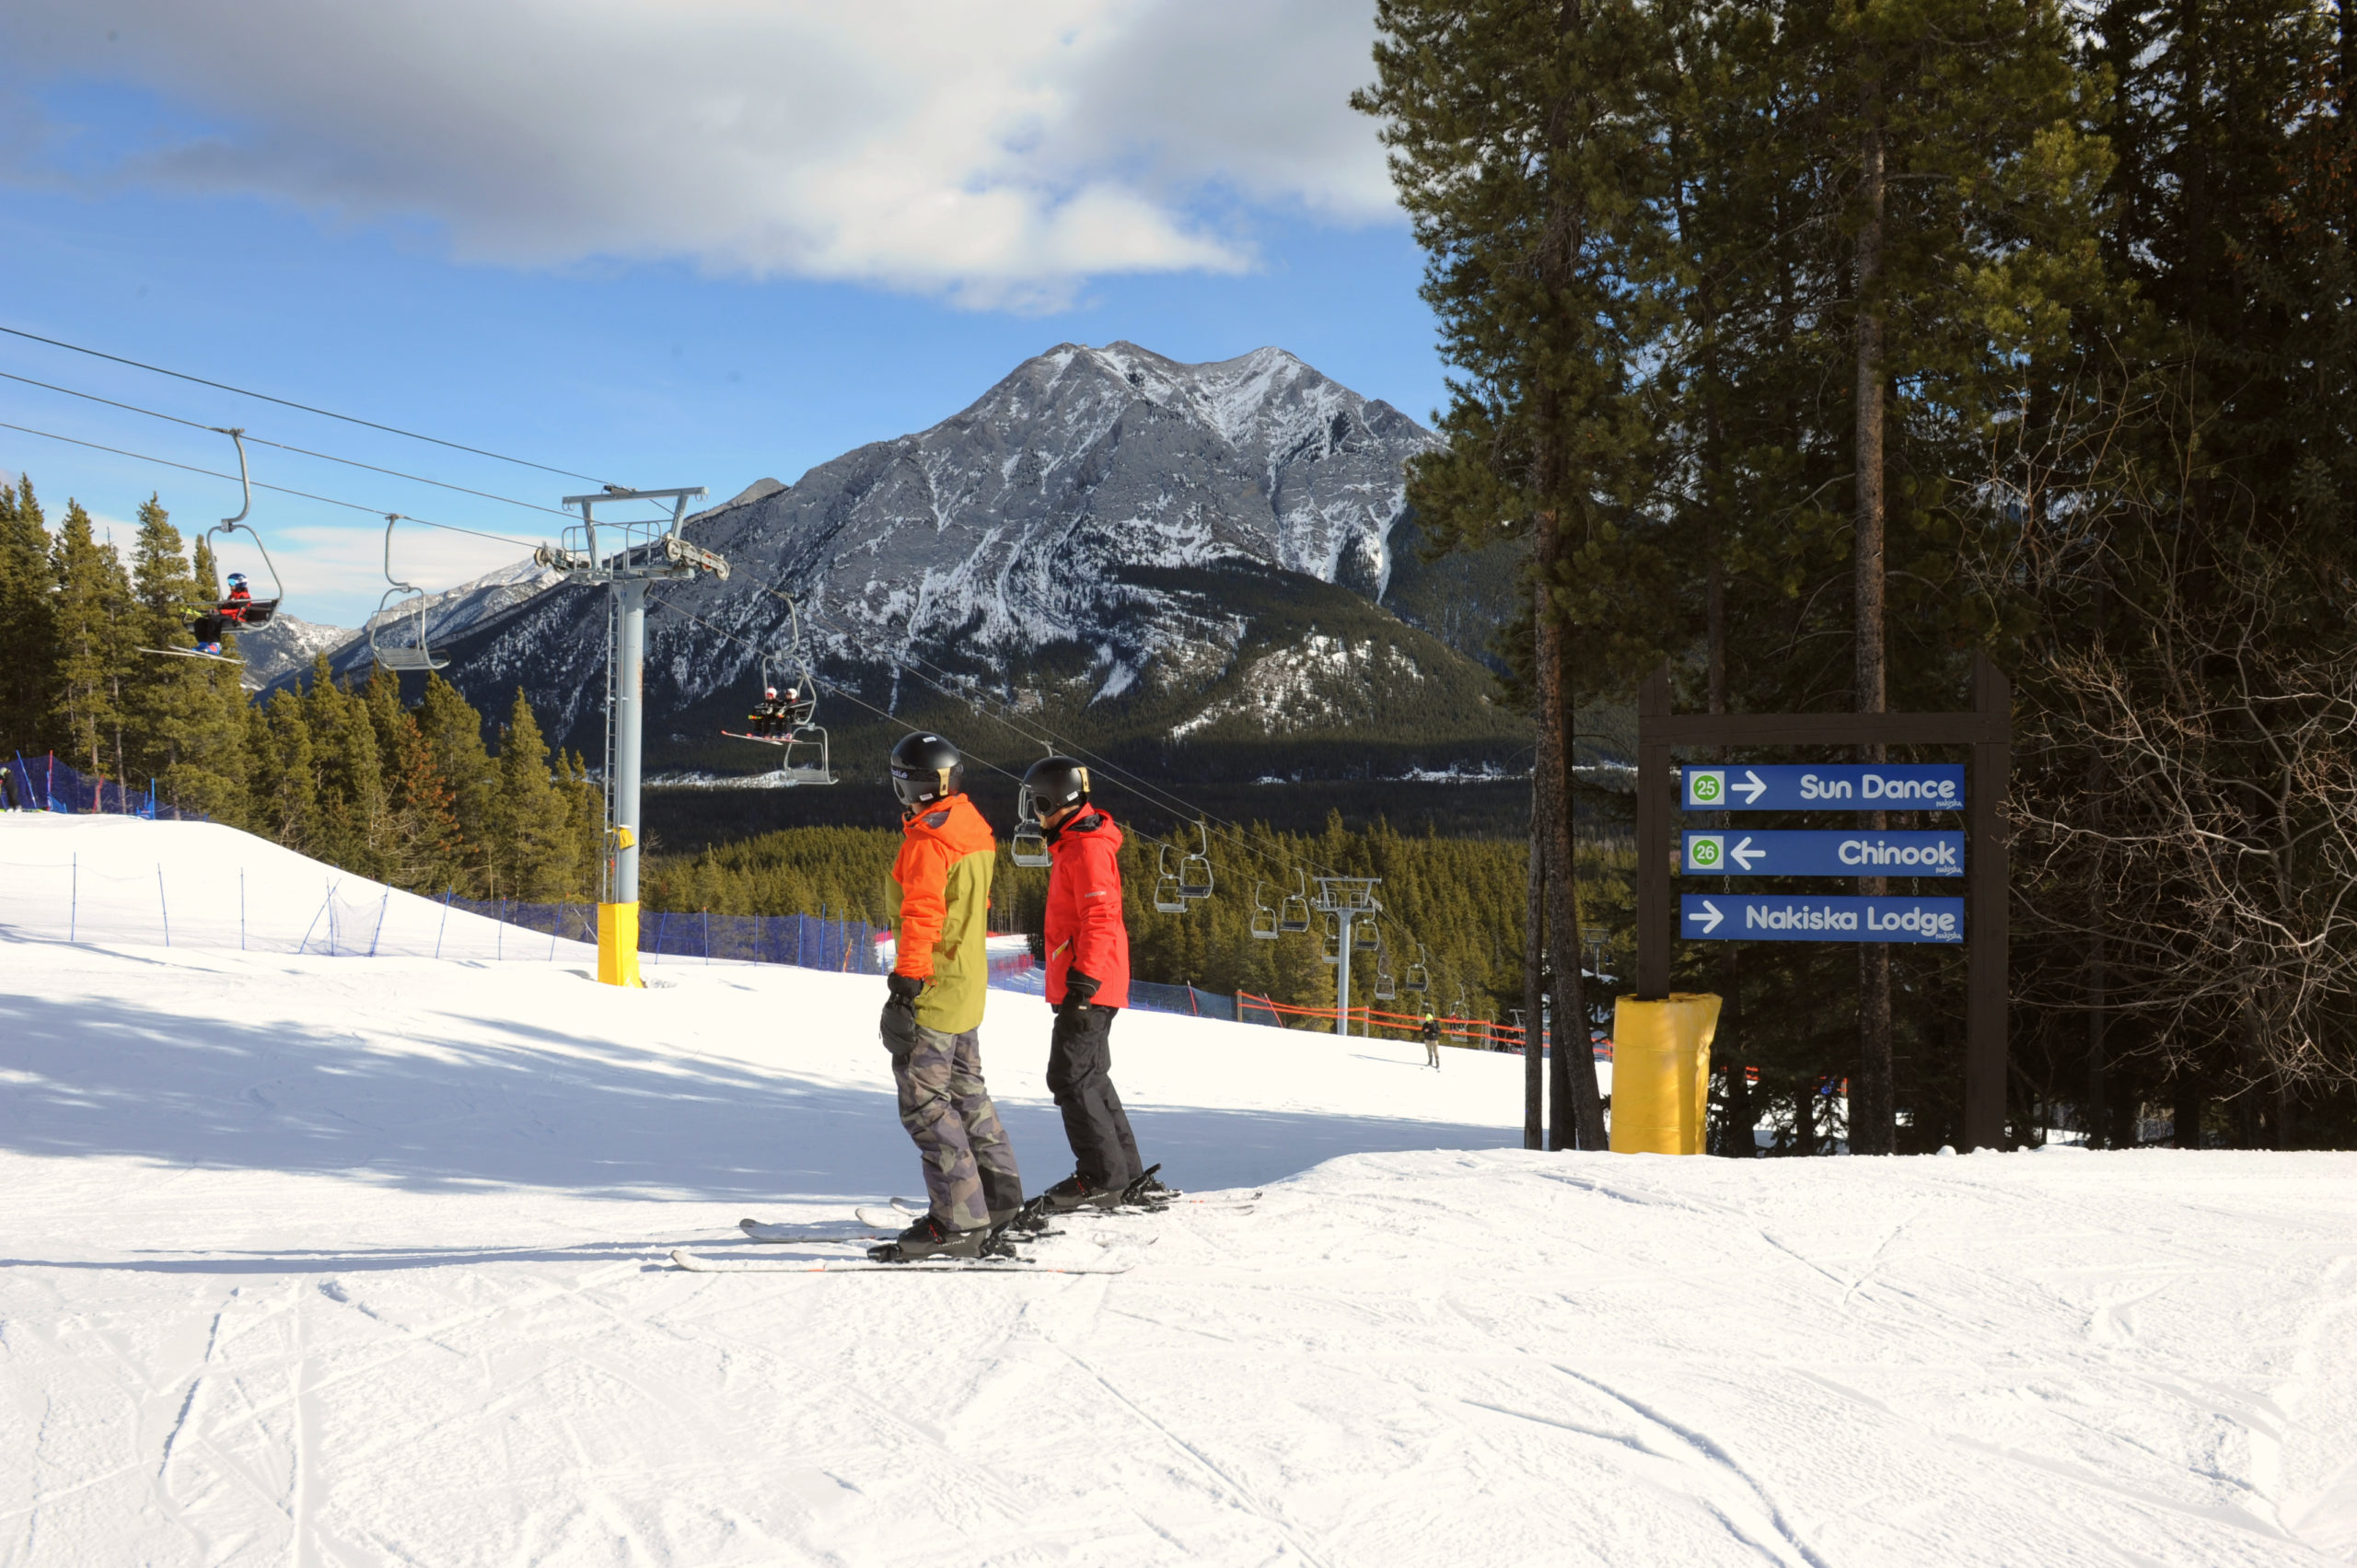 New to winter sports? Discover the joy of skiing this spring at Nakiska